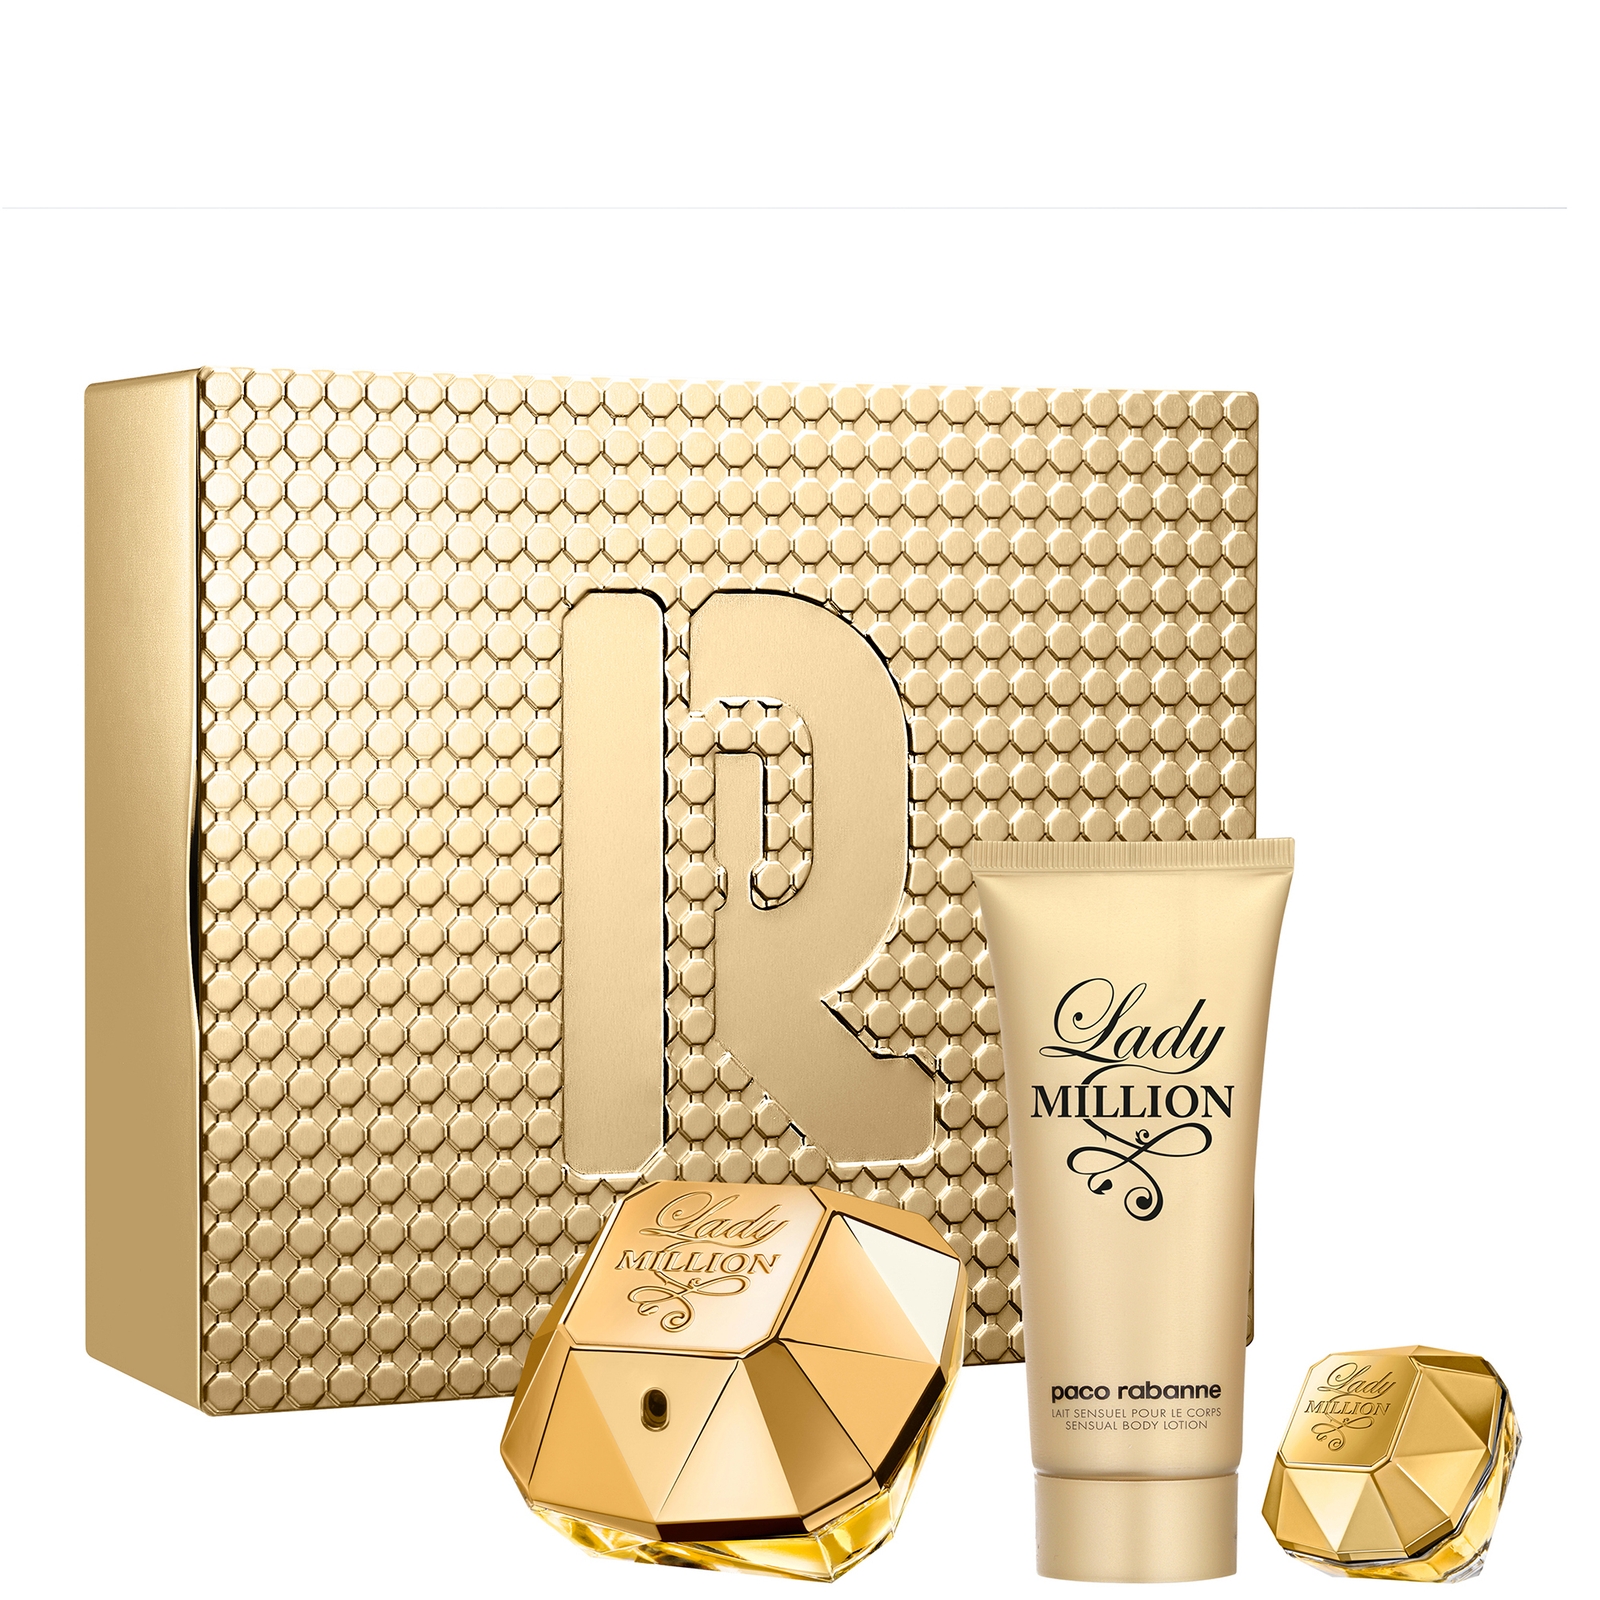 Image of Paco Rabanne Lady Million 80ml Eau de Parfum Profumo and 100ml Sensual Body Lotion Set with 5ml Eau de Parfum Profumo